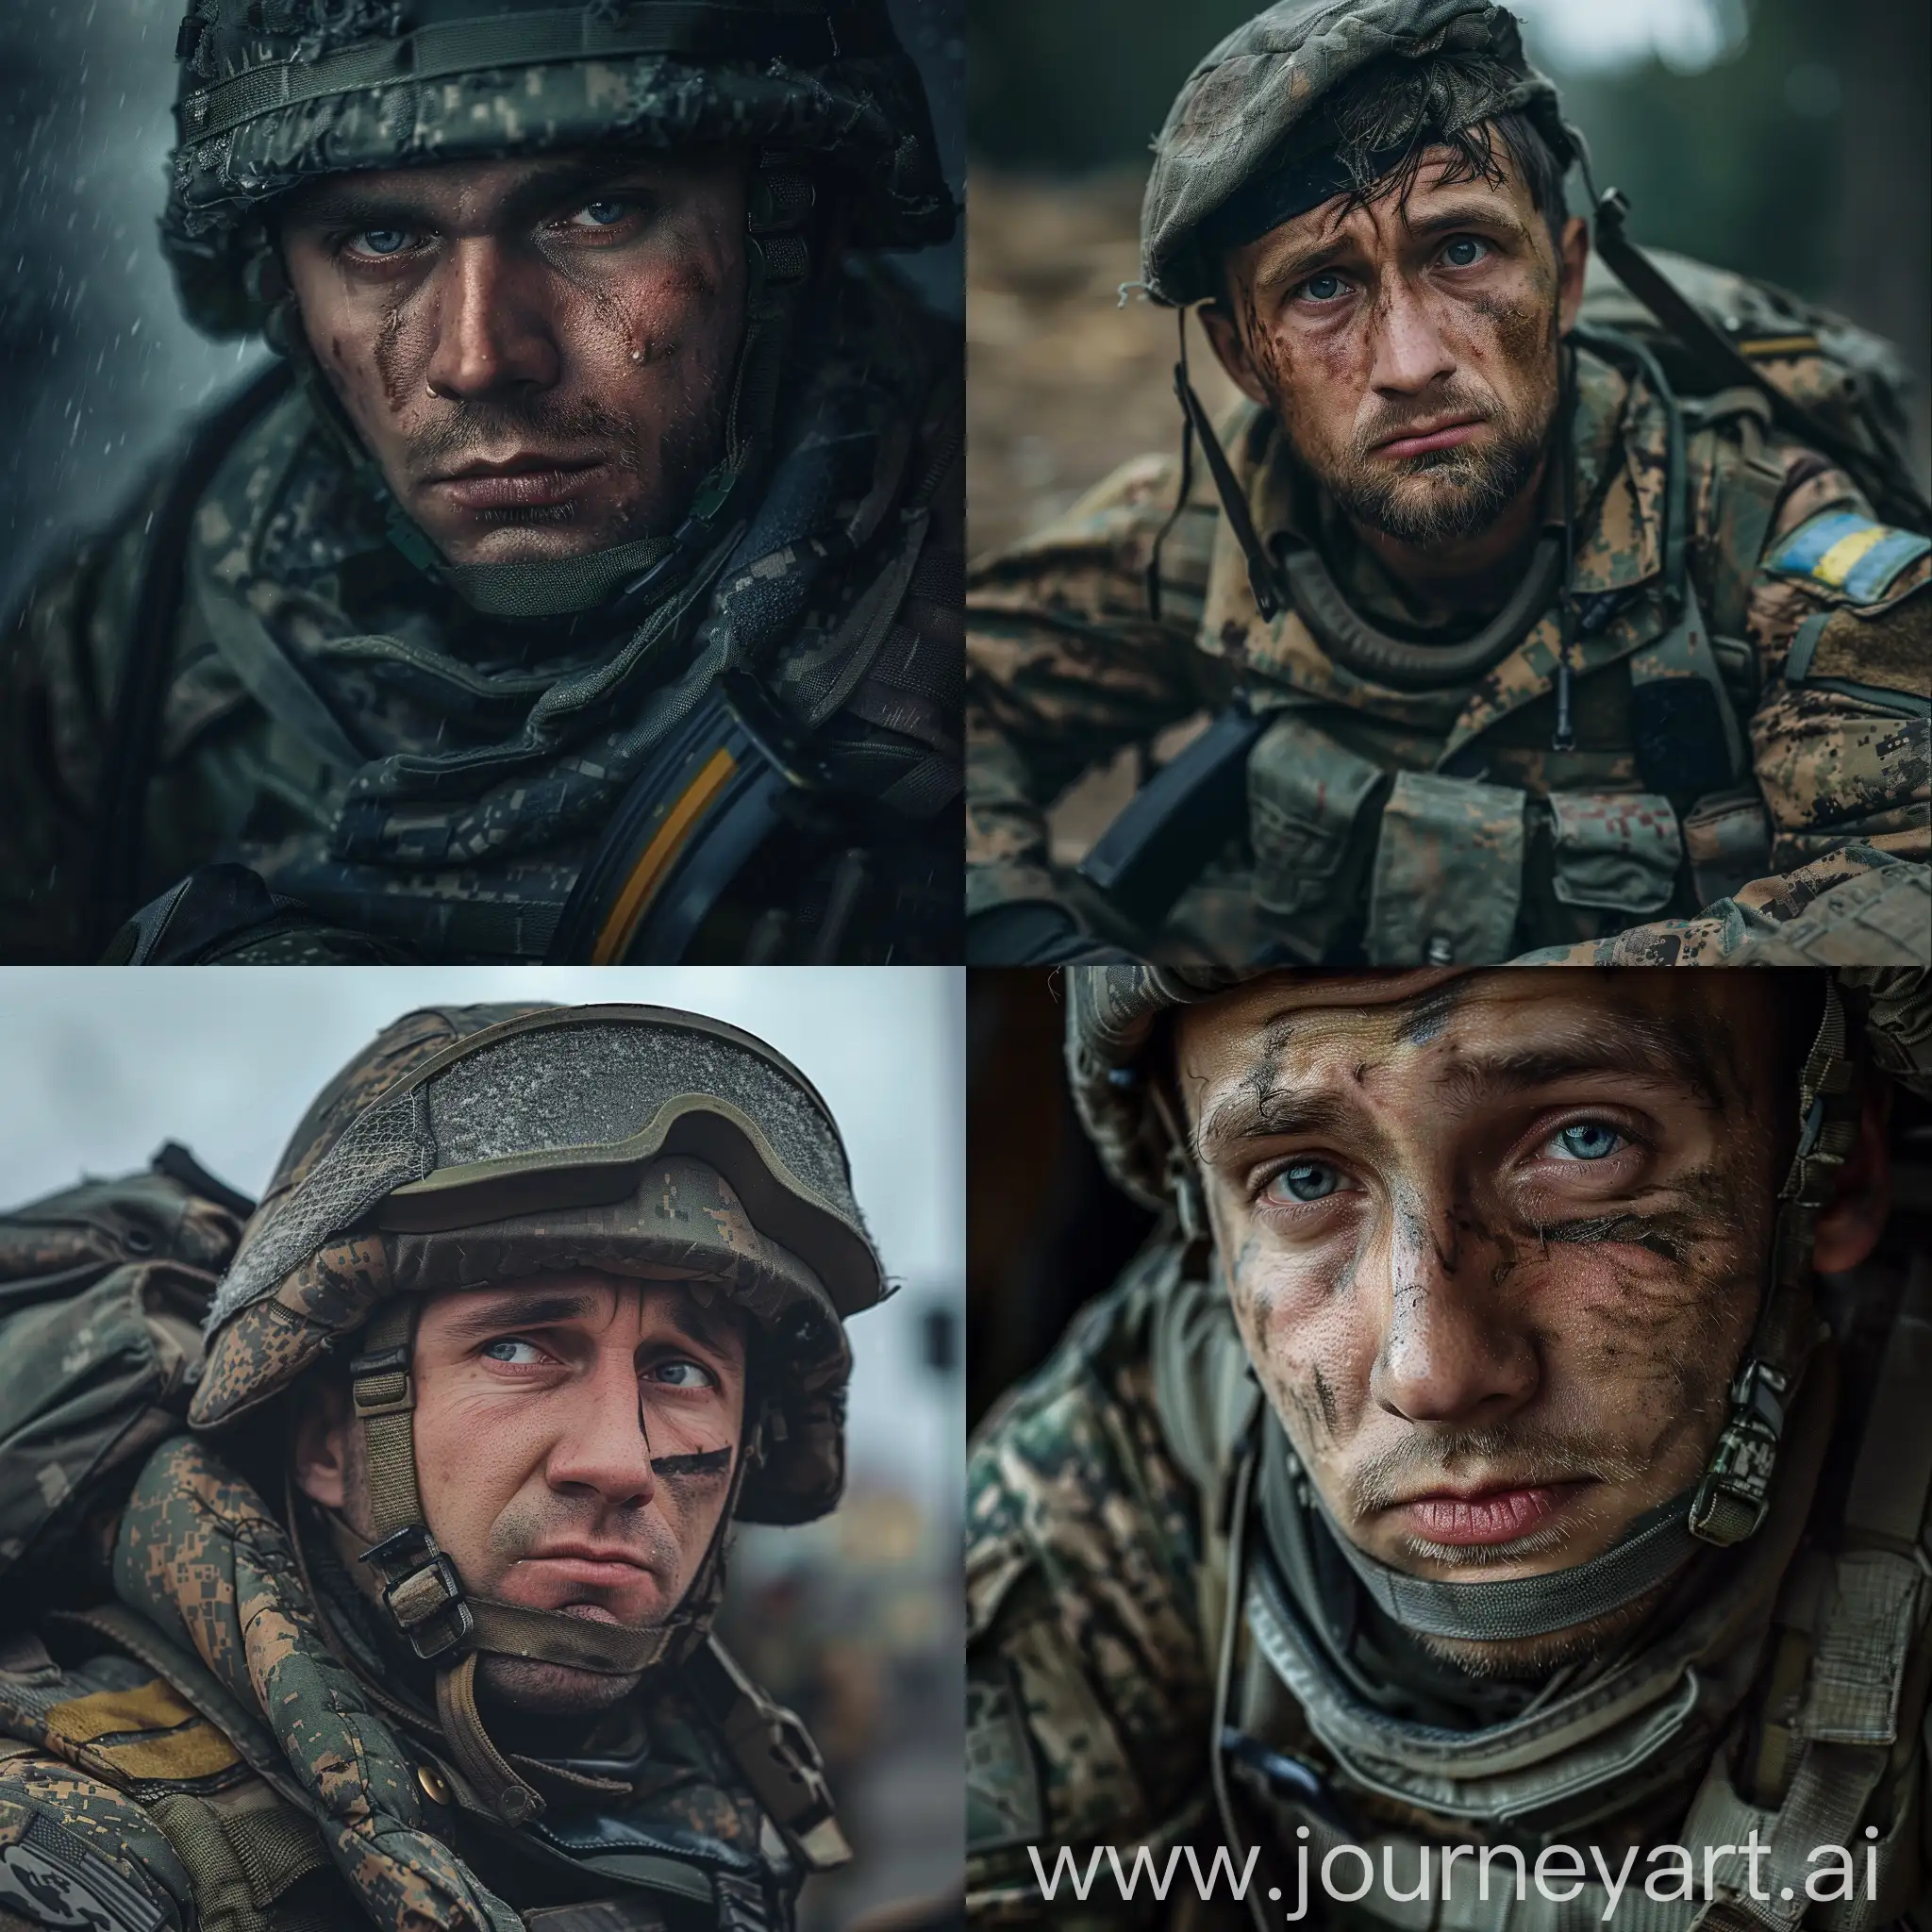 Portrait-of-Ukrainian-Soldier-with-a-Sad-Expression